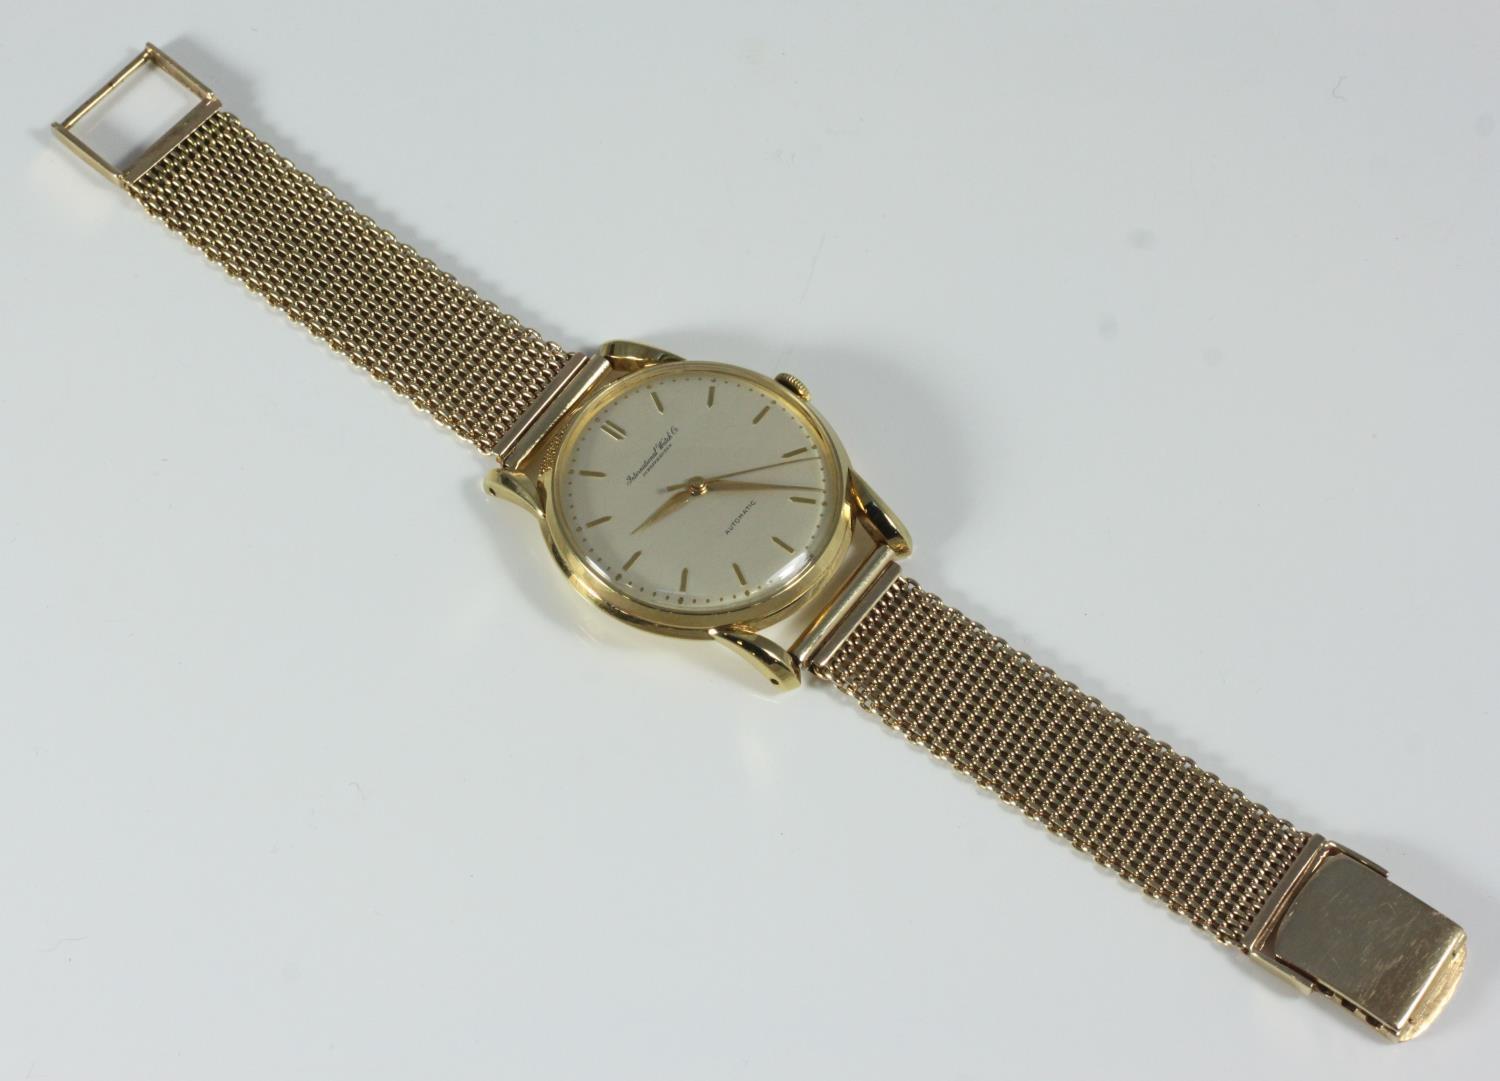 A late 1950s vintage gentlemen's IWC (International Watch Co) dress watch, 18ct gold plain